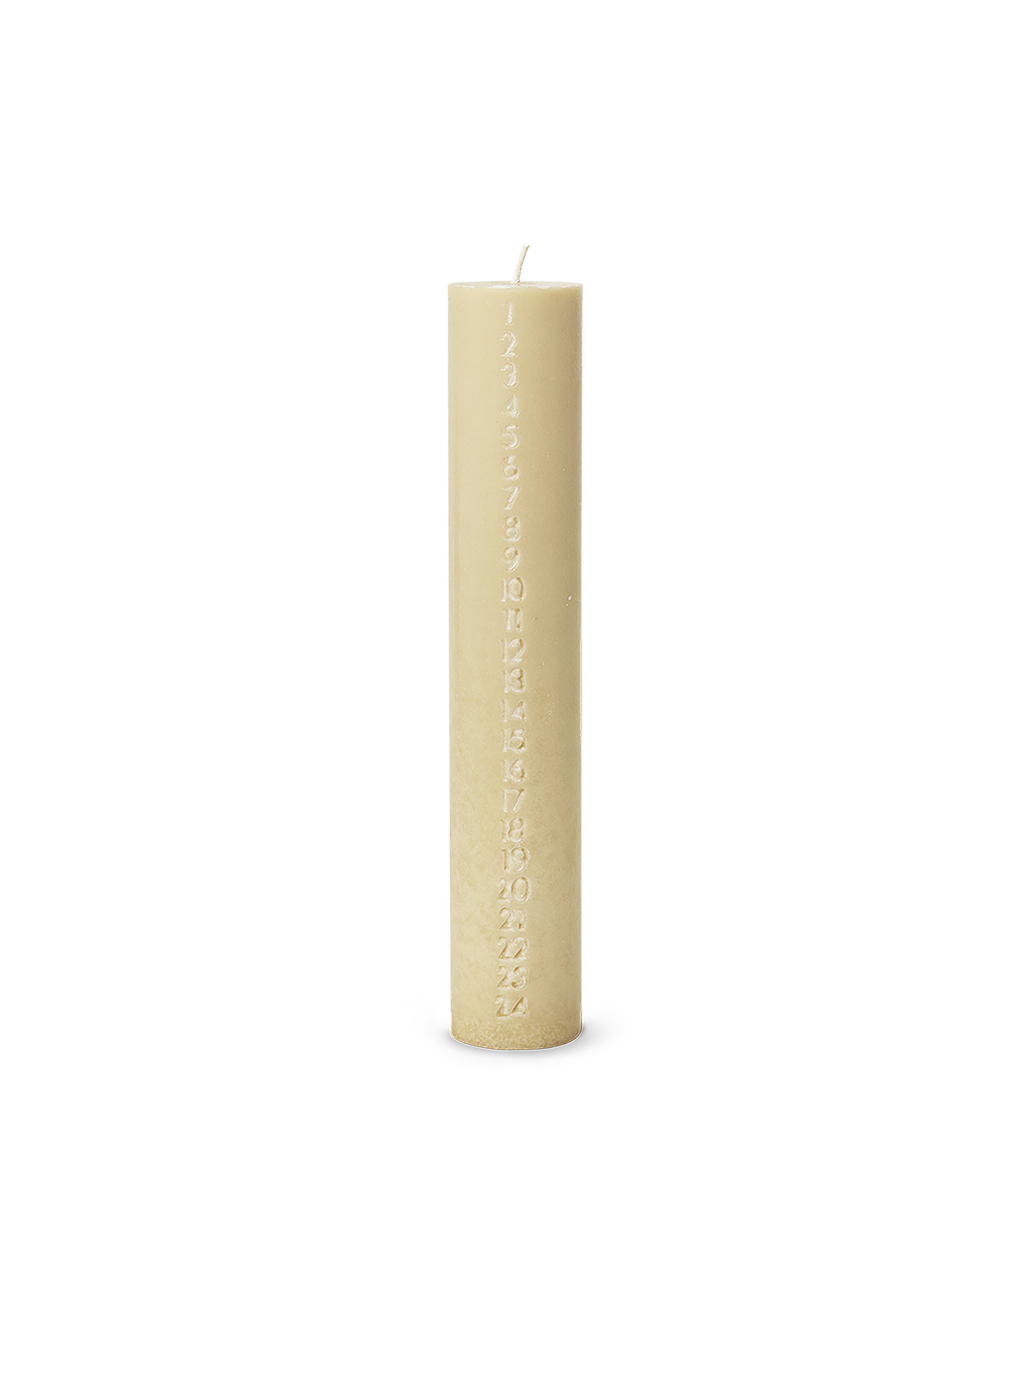 candela dell'avvento